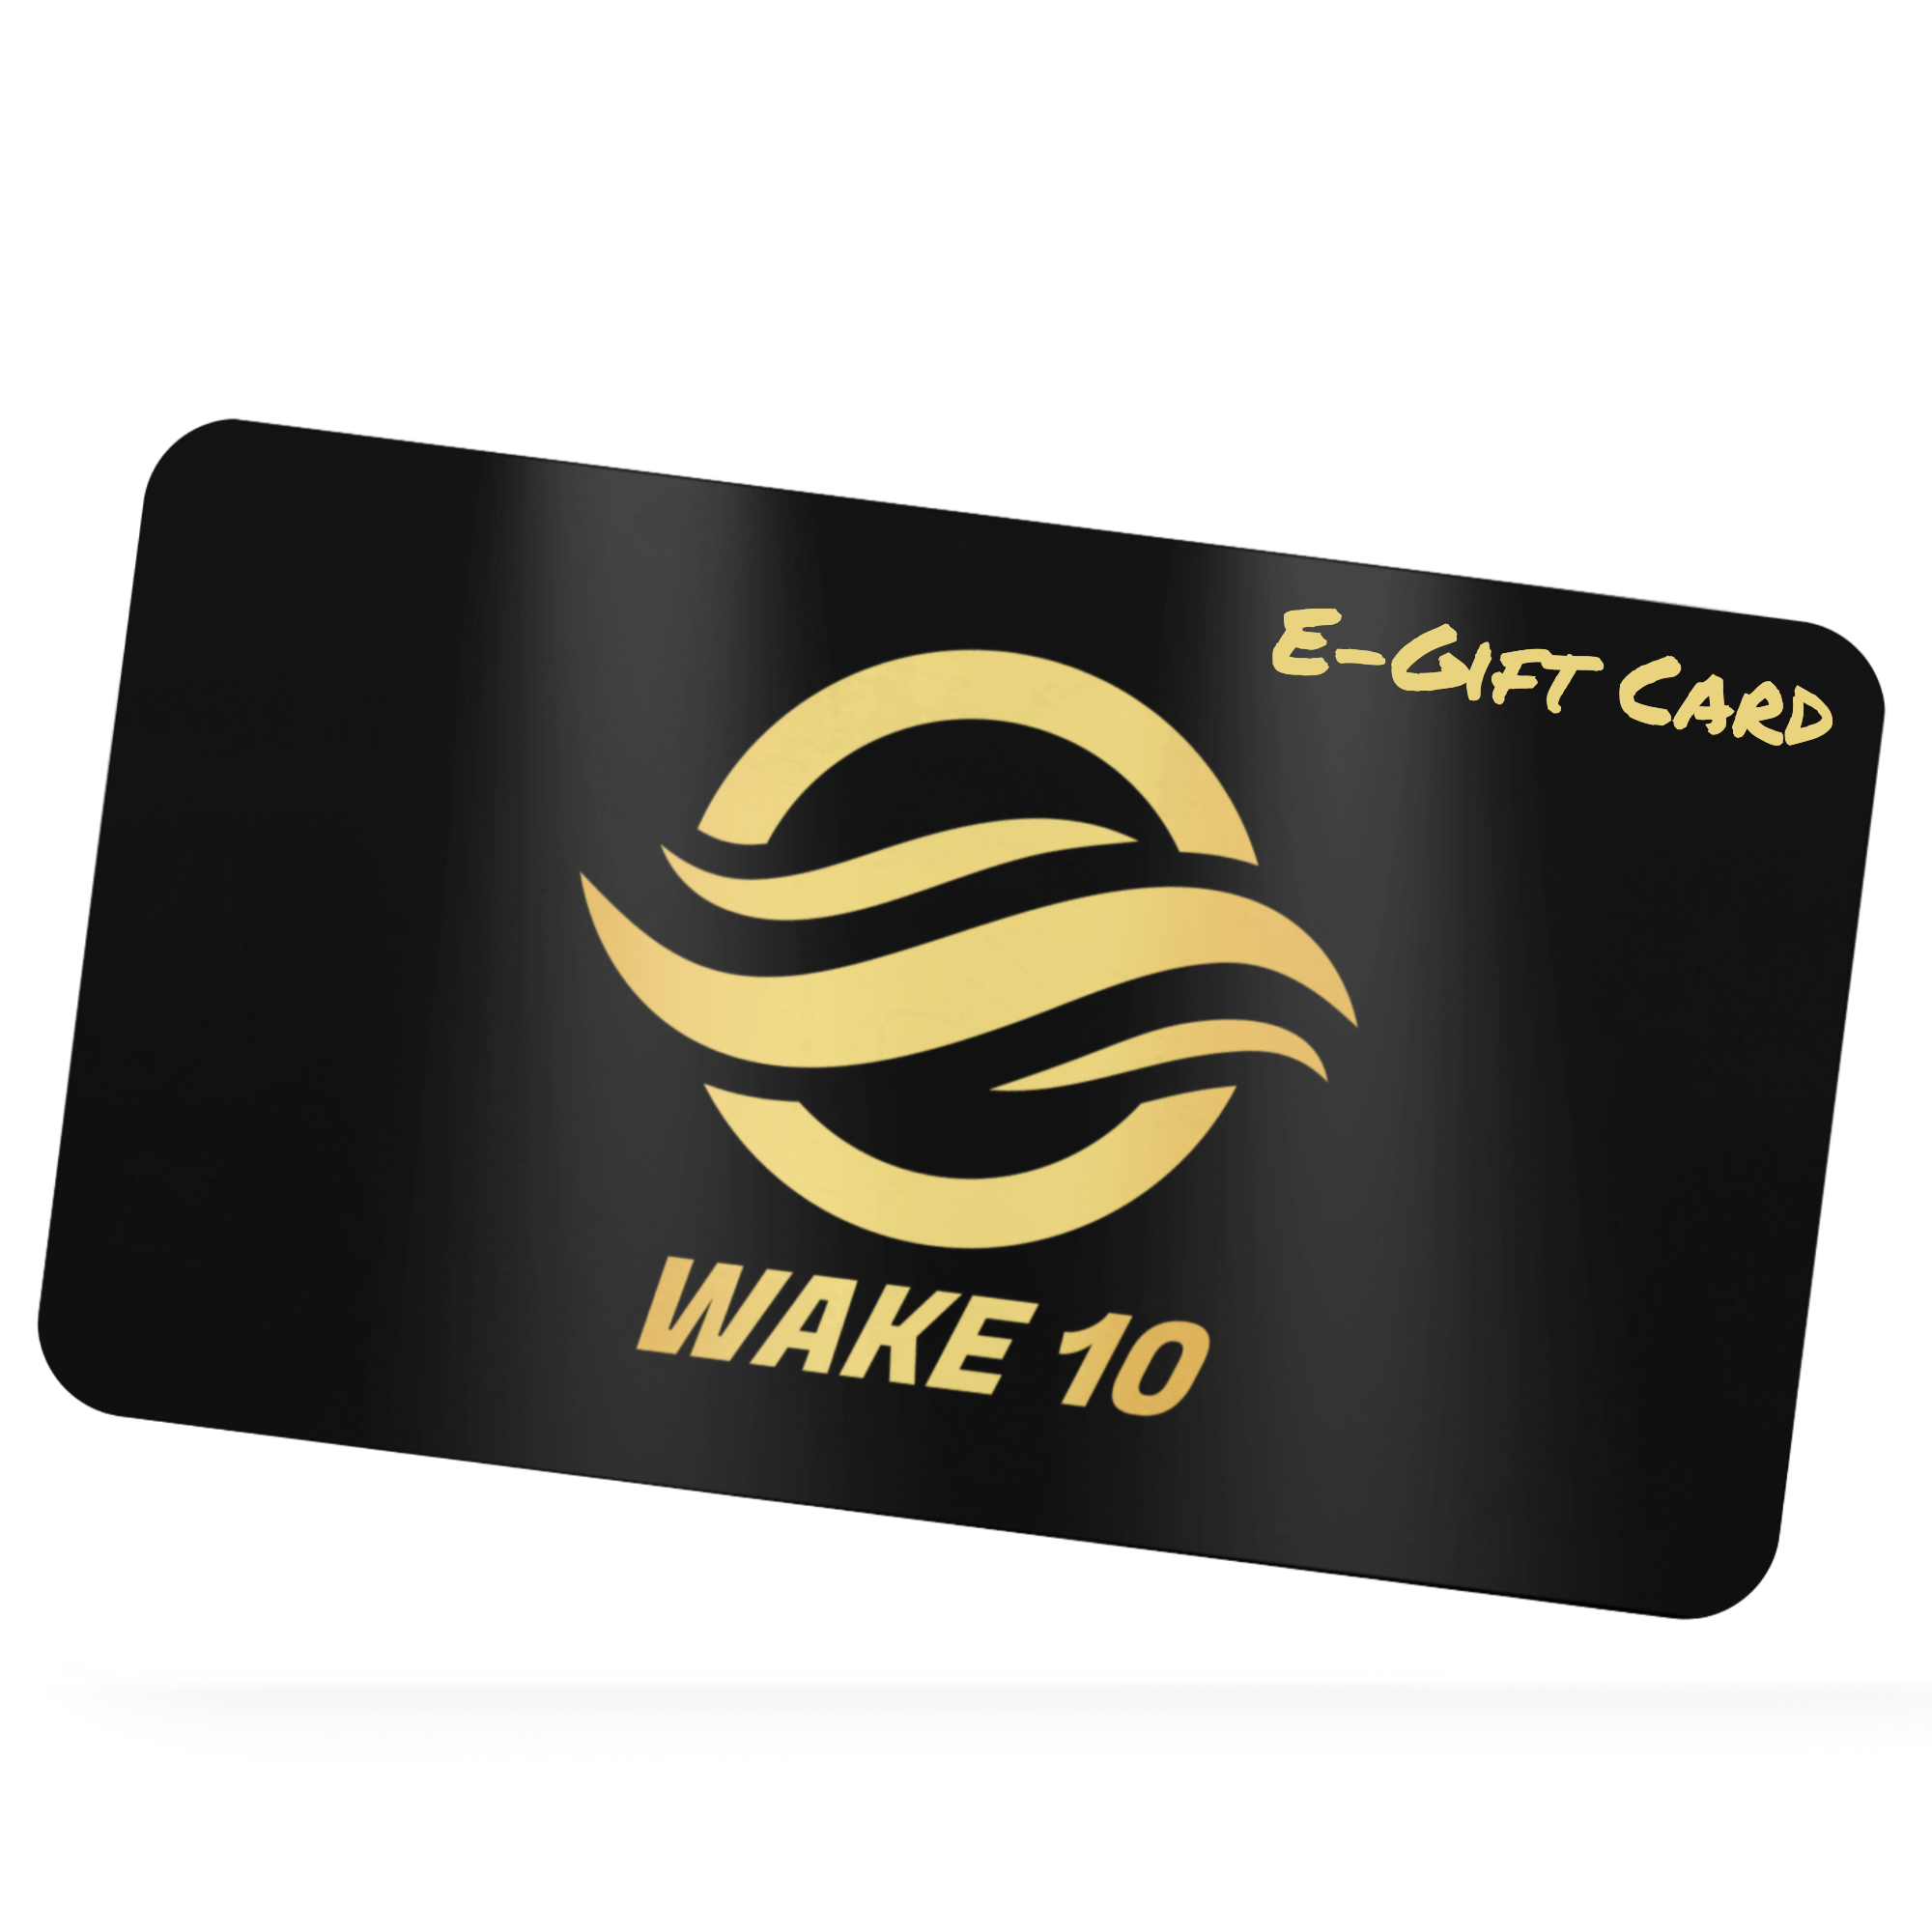 WAKE 10 E-Gift Card. Buy Now!